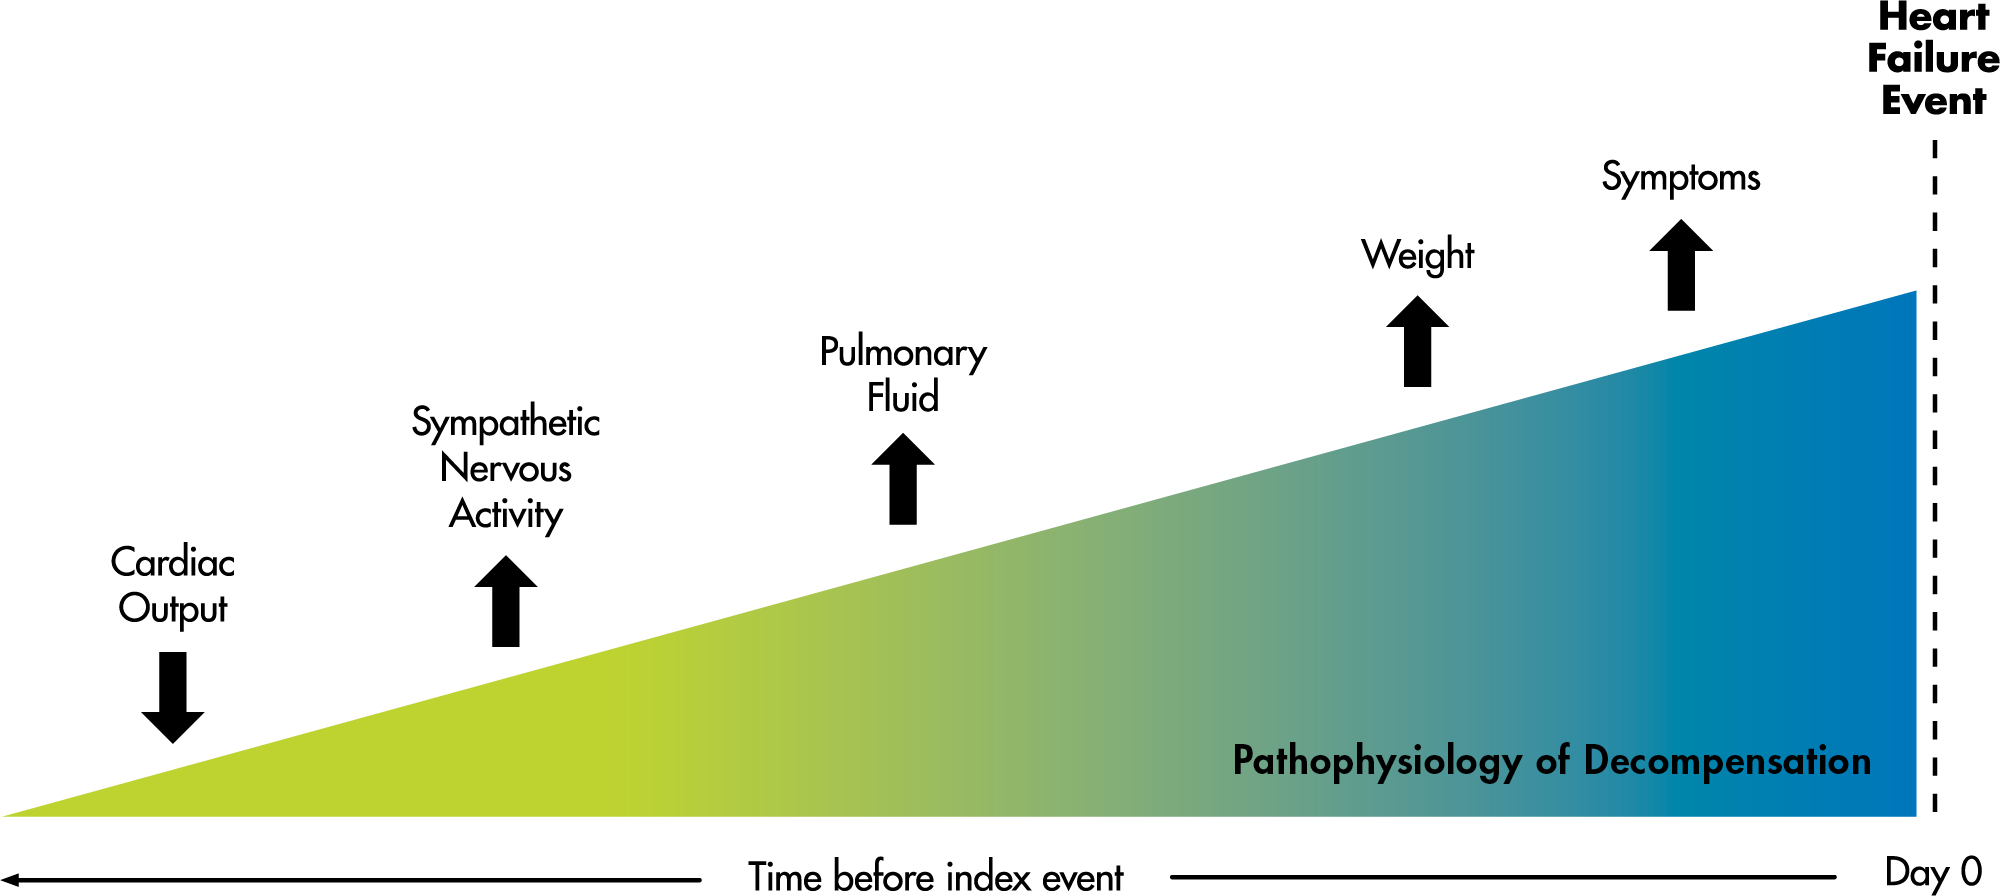 Pathophysiology of decompensation chart